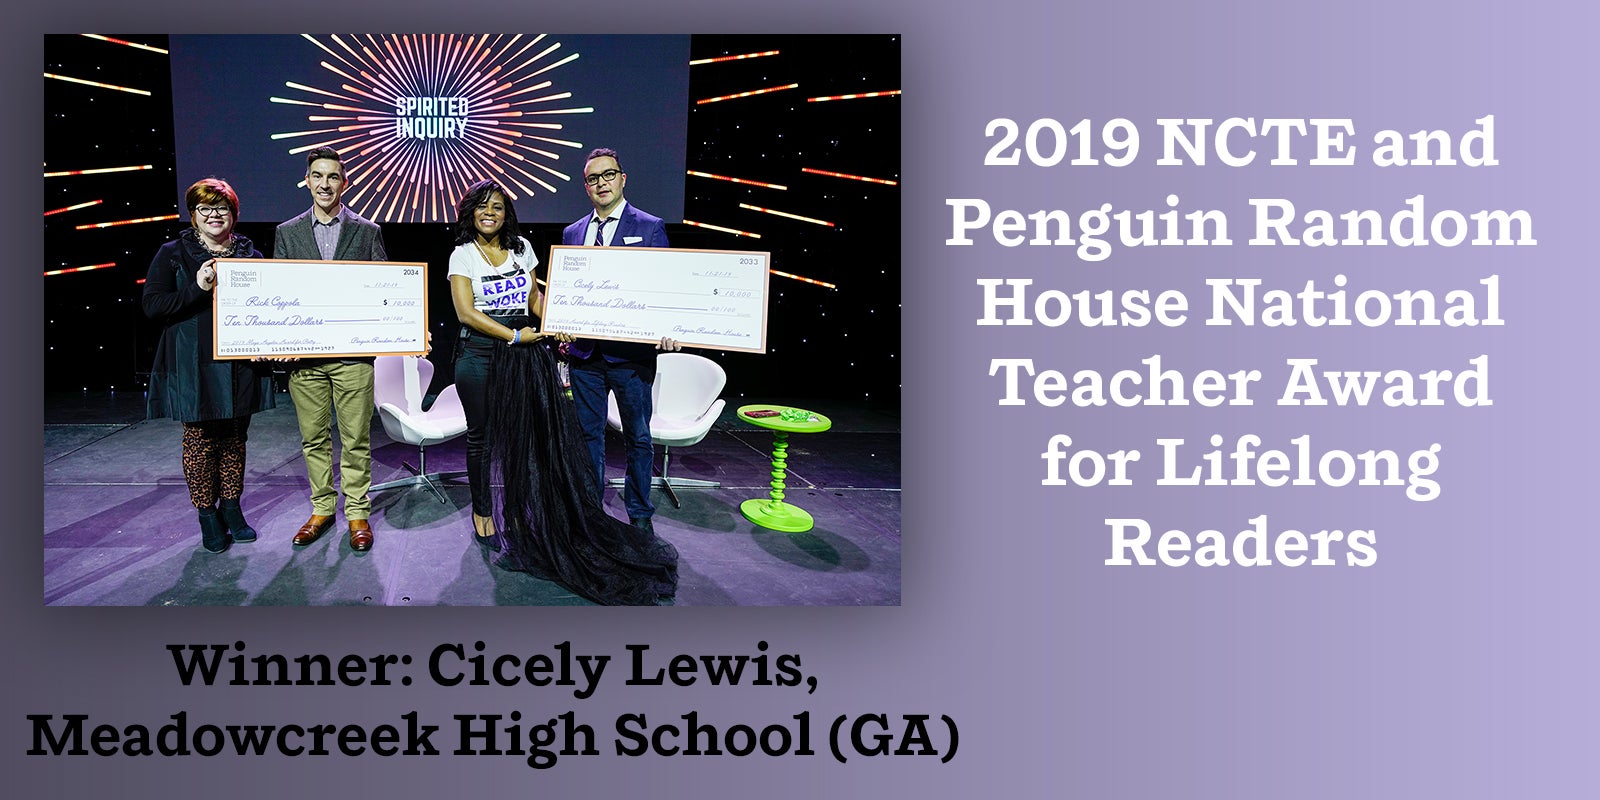 2019 NCTE and Penguin Random House National Teacher Award for Lifelong Readers Winner: Cicely Lewis, Meadowcreek High School (GA)